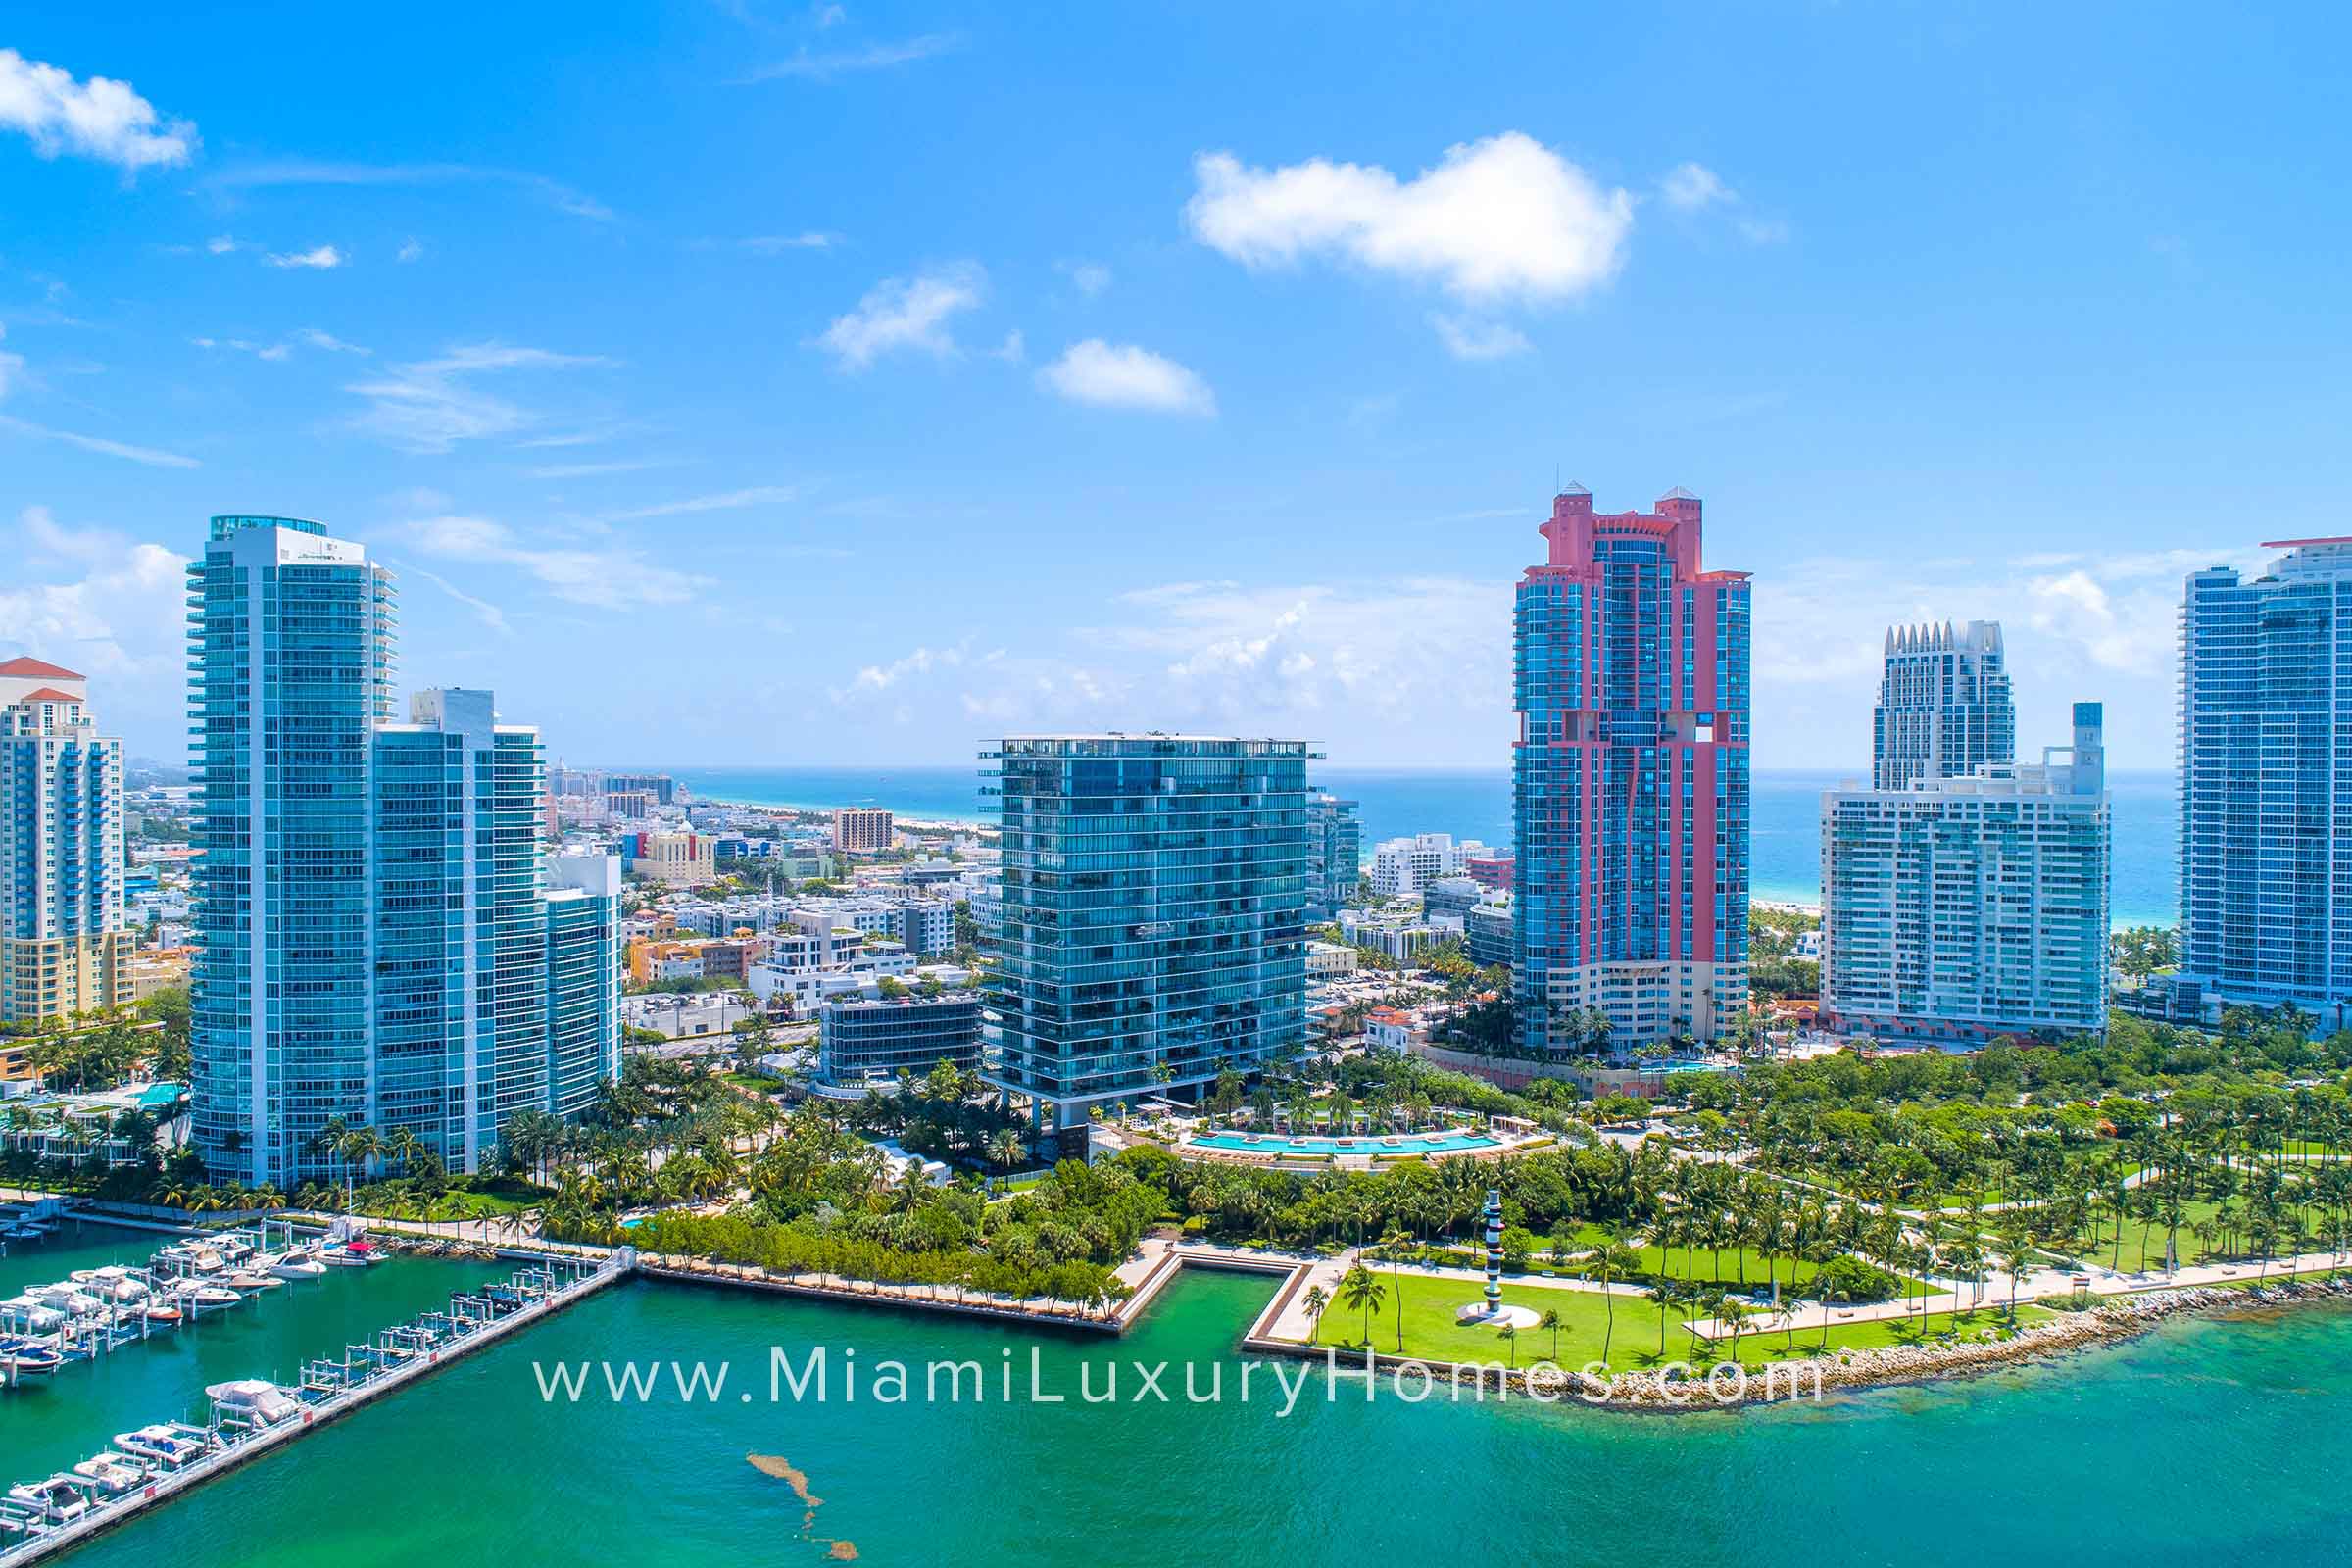 Apogee South Beach Condos in Miami